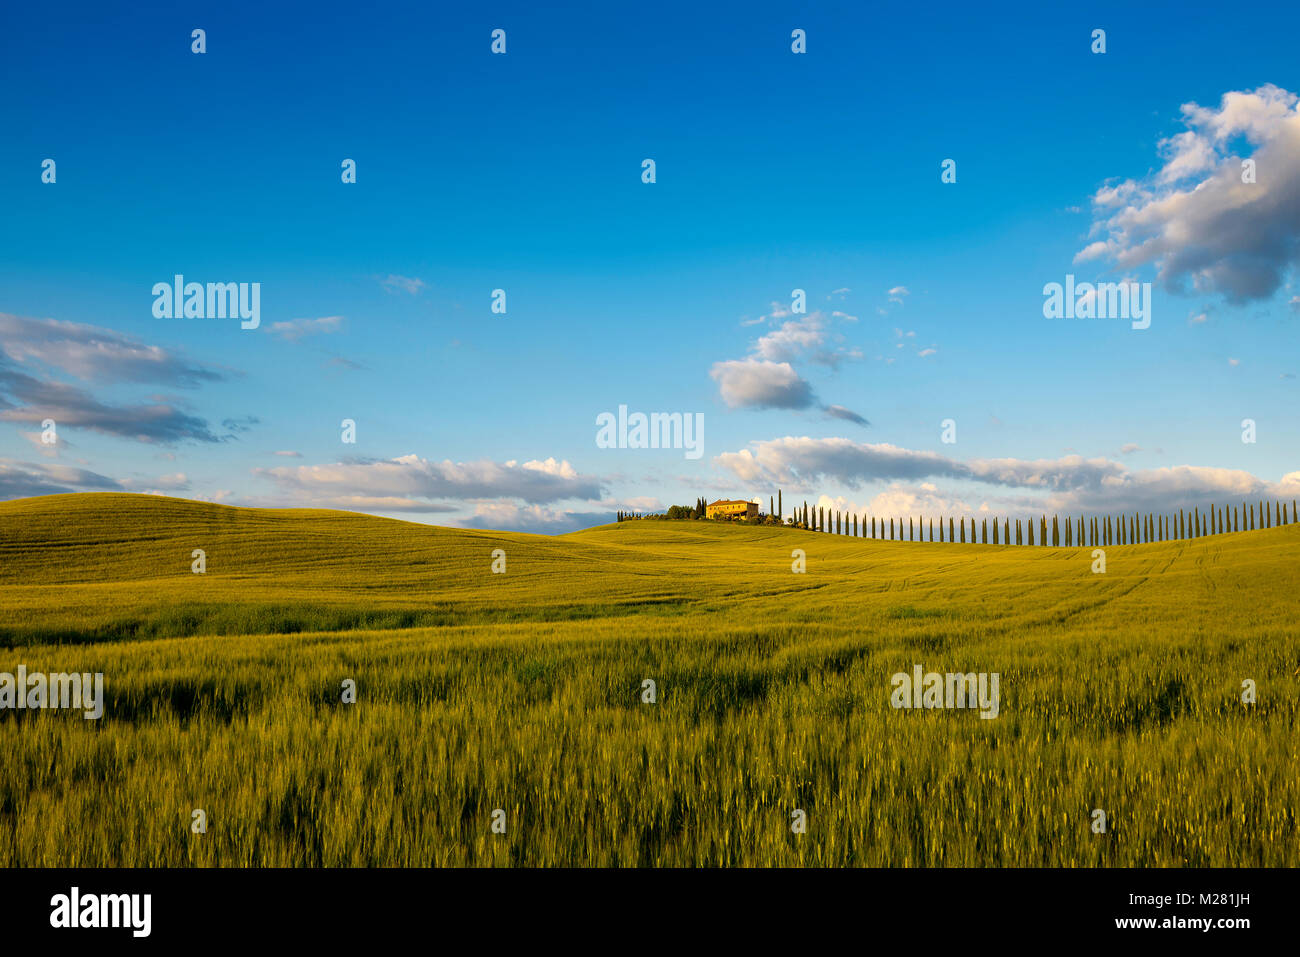 Toskana Landschaft mit Zypressen, Bauernhof, Sonnenuntergang, San Quirico d'Orcia, Val d'Orcia, Toskana, Italien Stockfoto